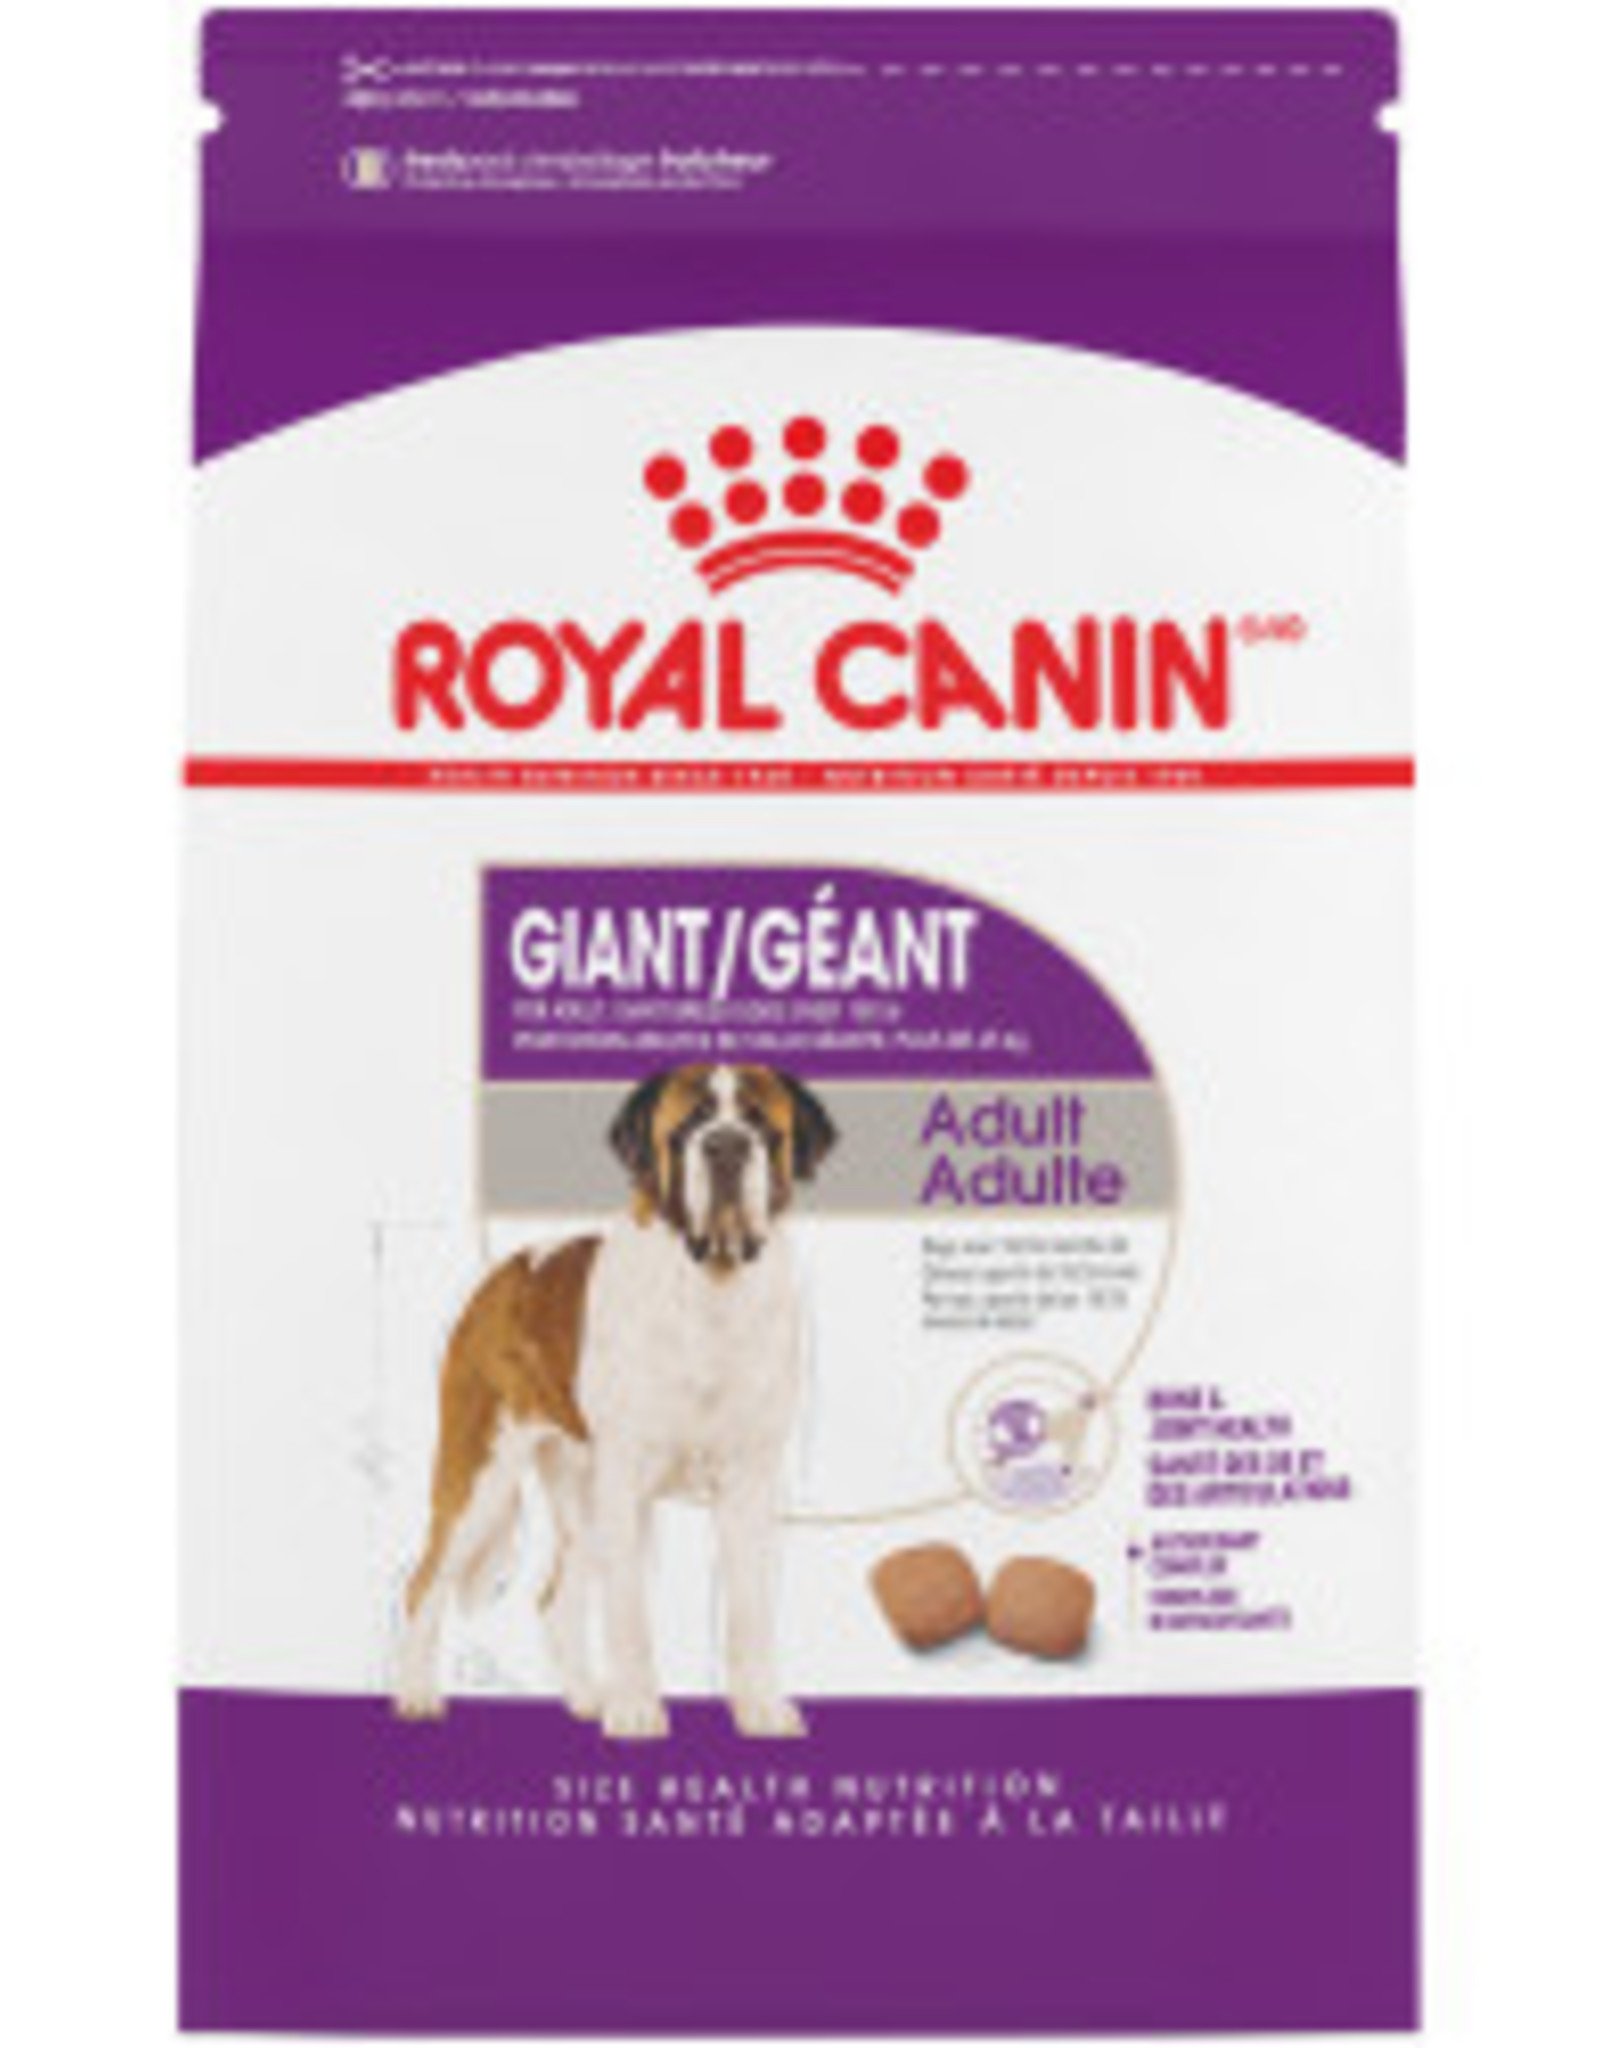 ROYAL CANIN ROYAL CANIN DOG GIANT BREED ADULT 35LBS